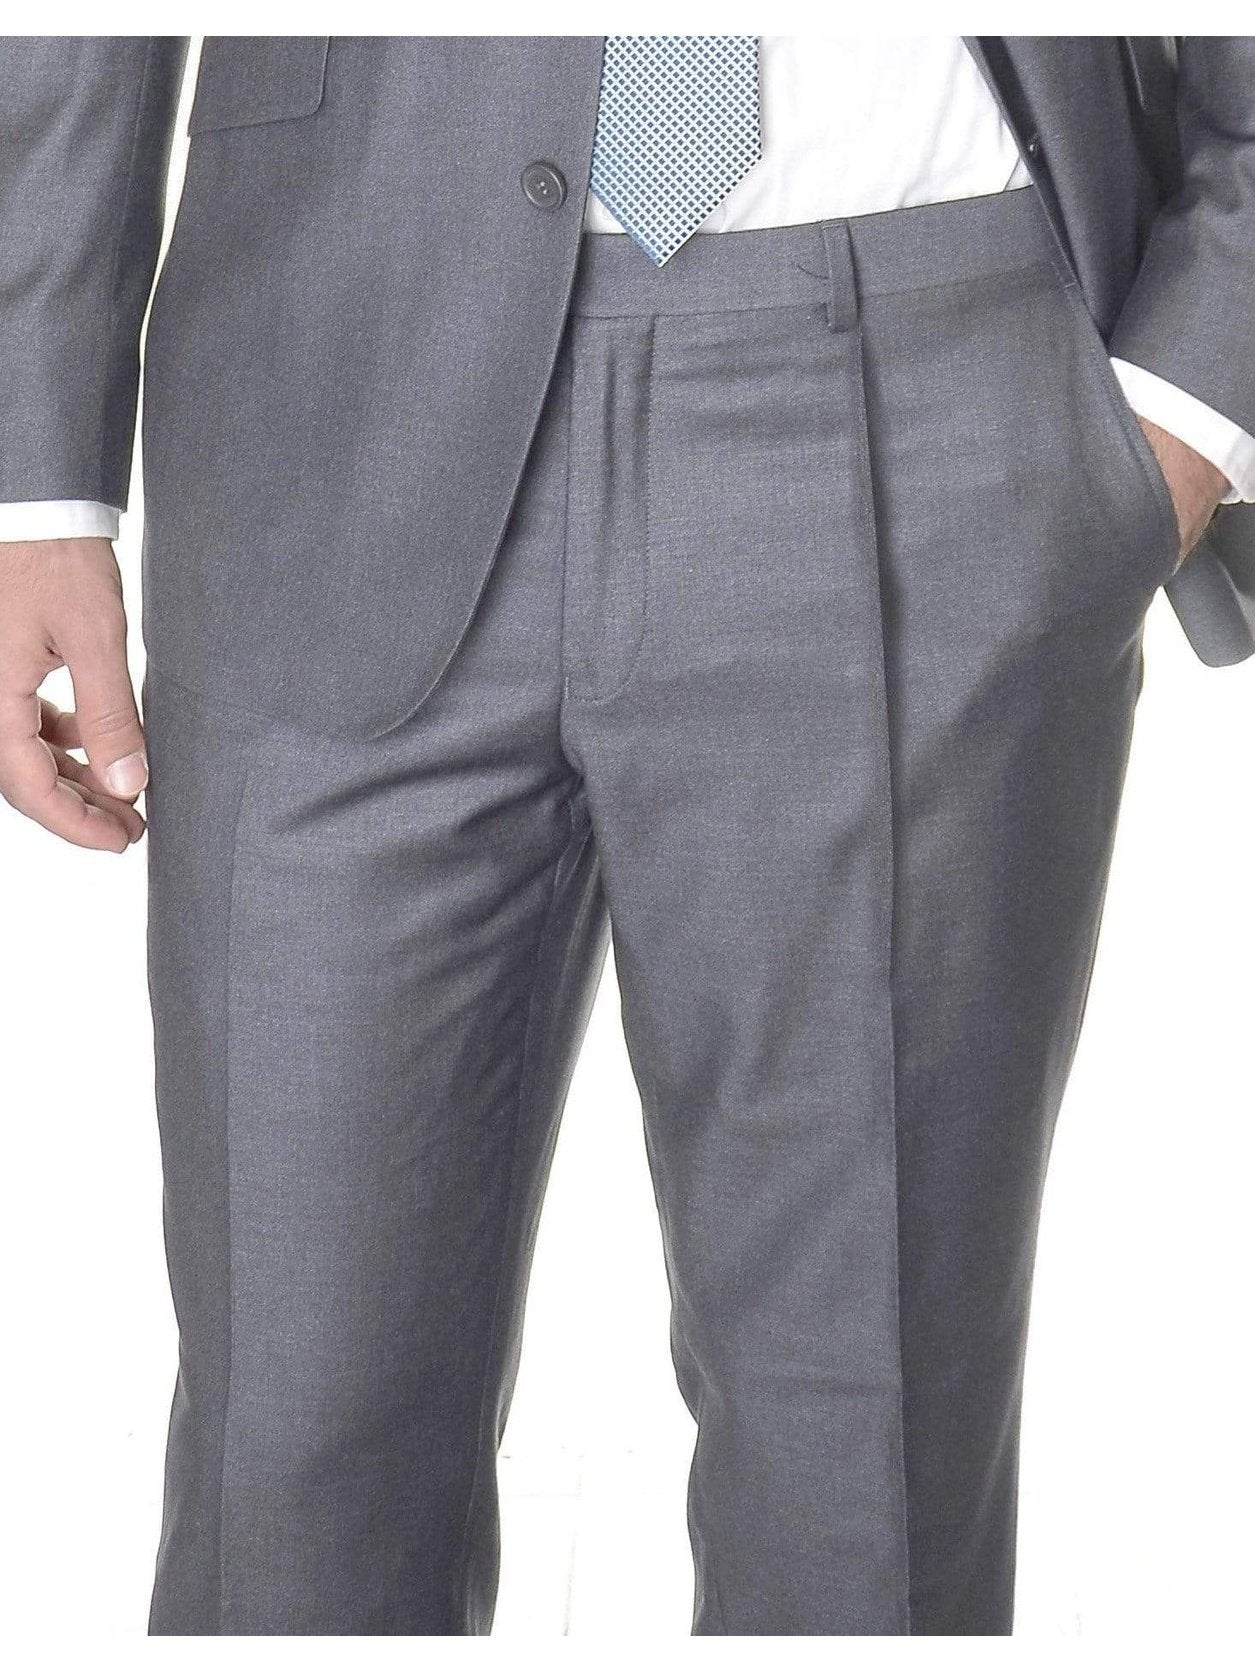 Label M PANTS 38W Mens Classic Fit Solid Light Gray Pleated Wool Dress Pants